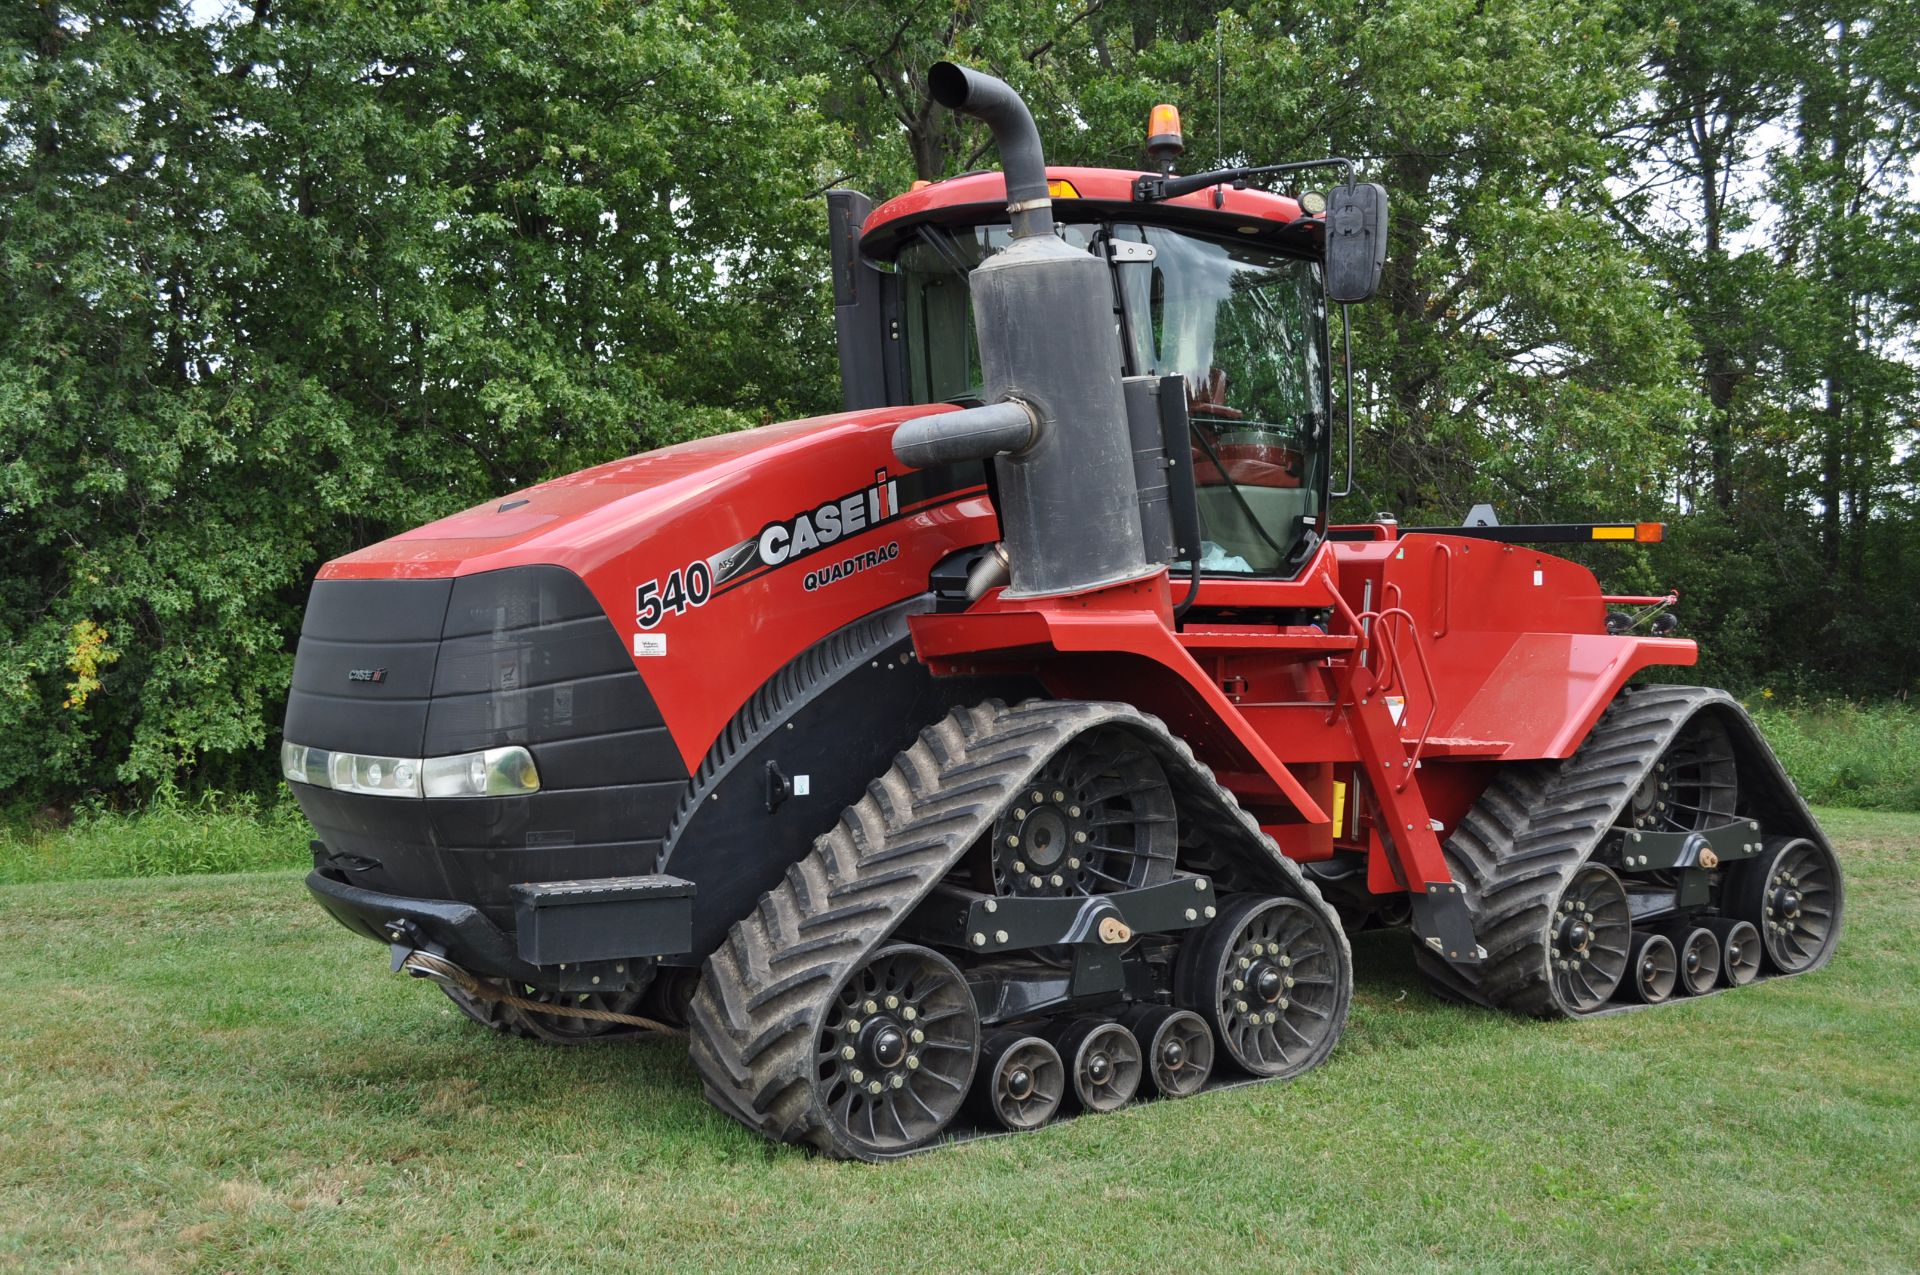 2015 Case IH 540 QuadTrac tractor, powershift, 30” belts, 6 hyd remotes, 1000 PTO, ag drawbar